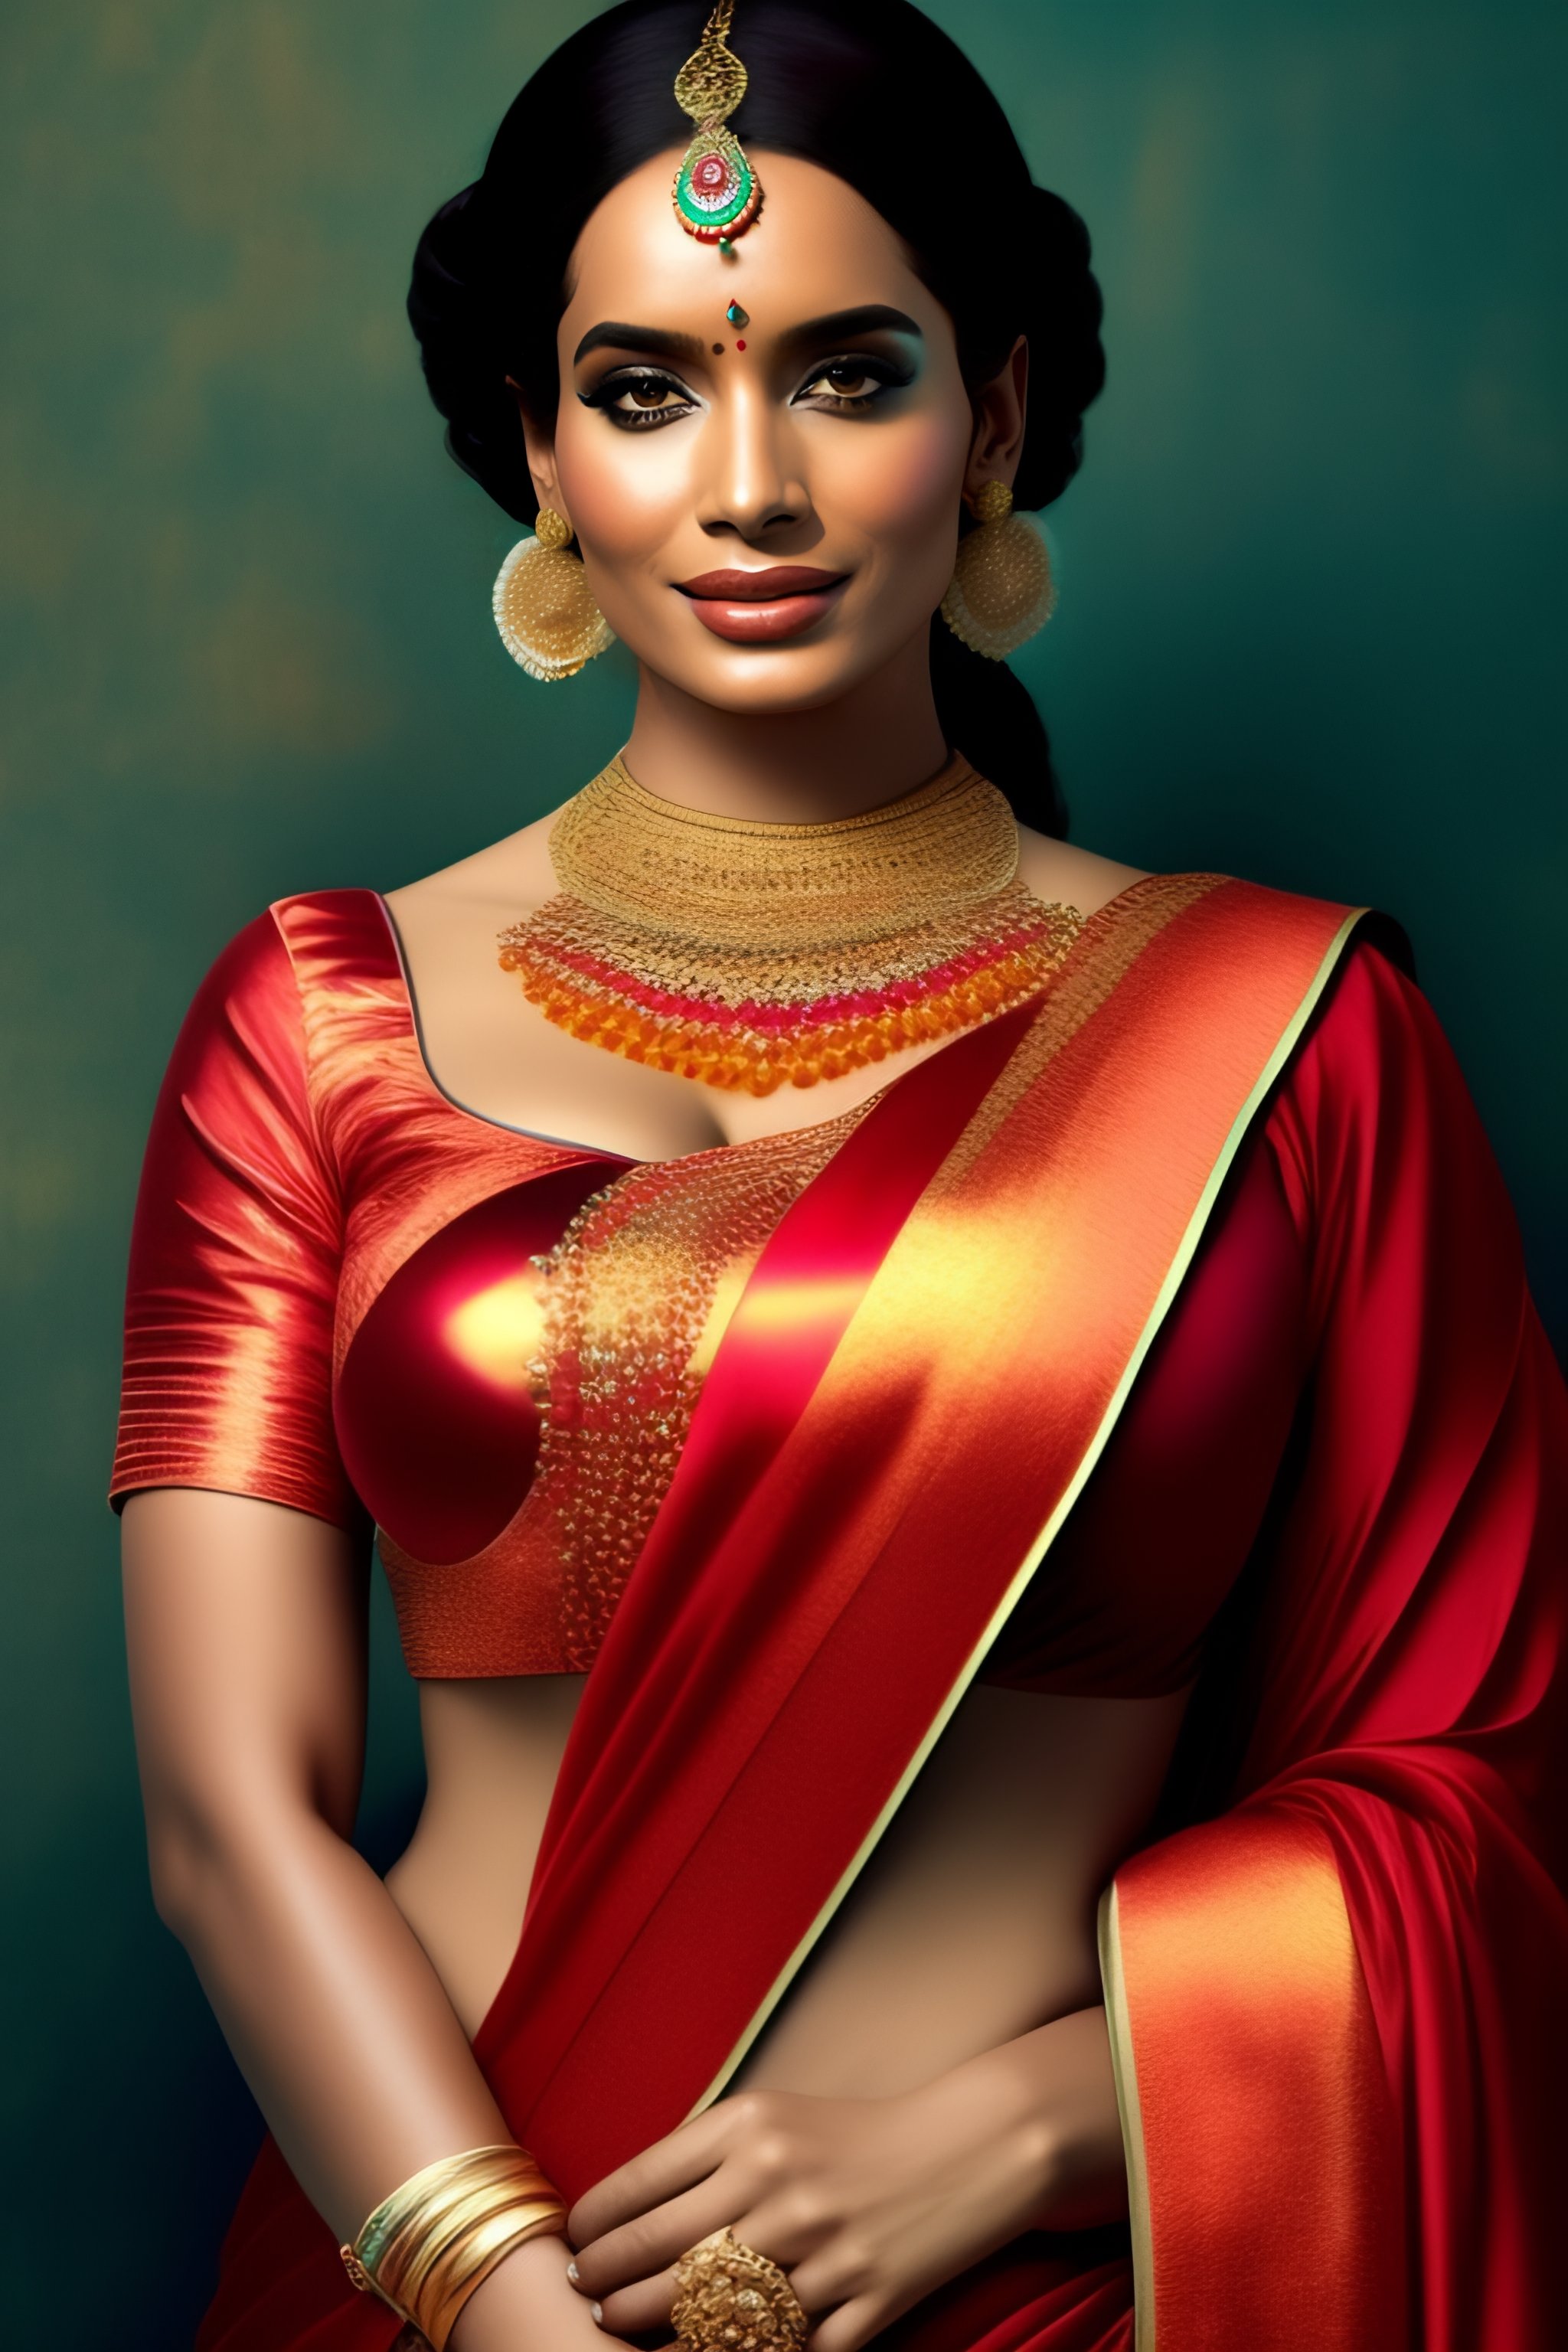 Lexica - Young north indian girl in a saree, christina hendricks